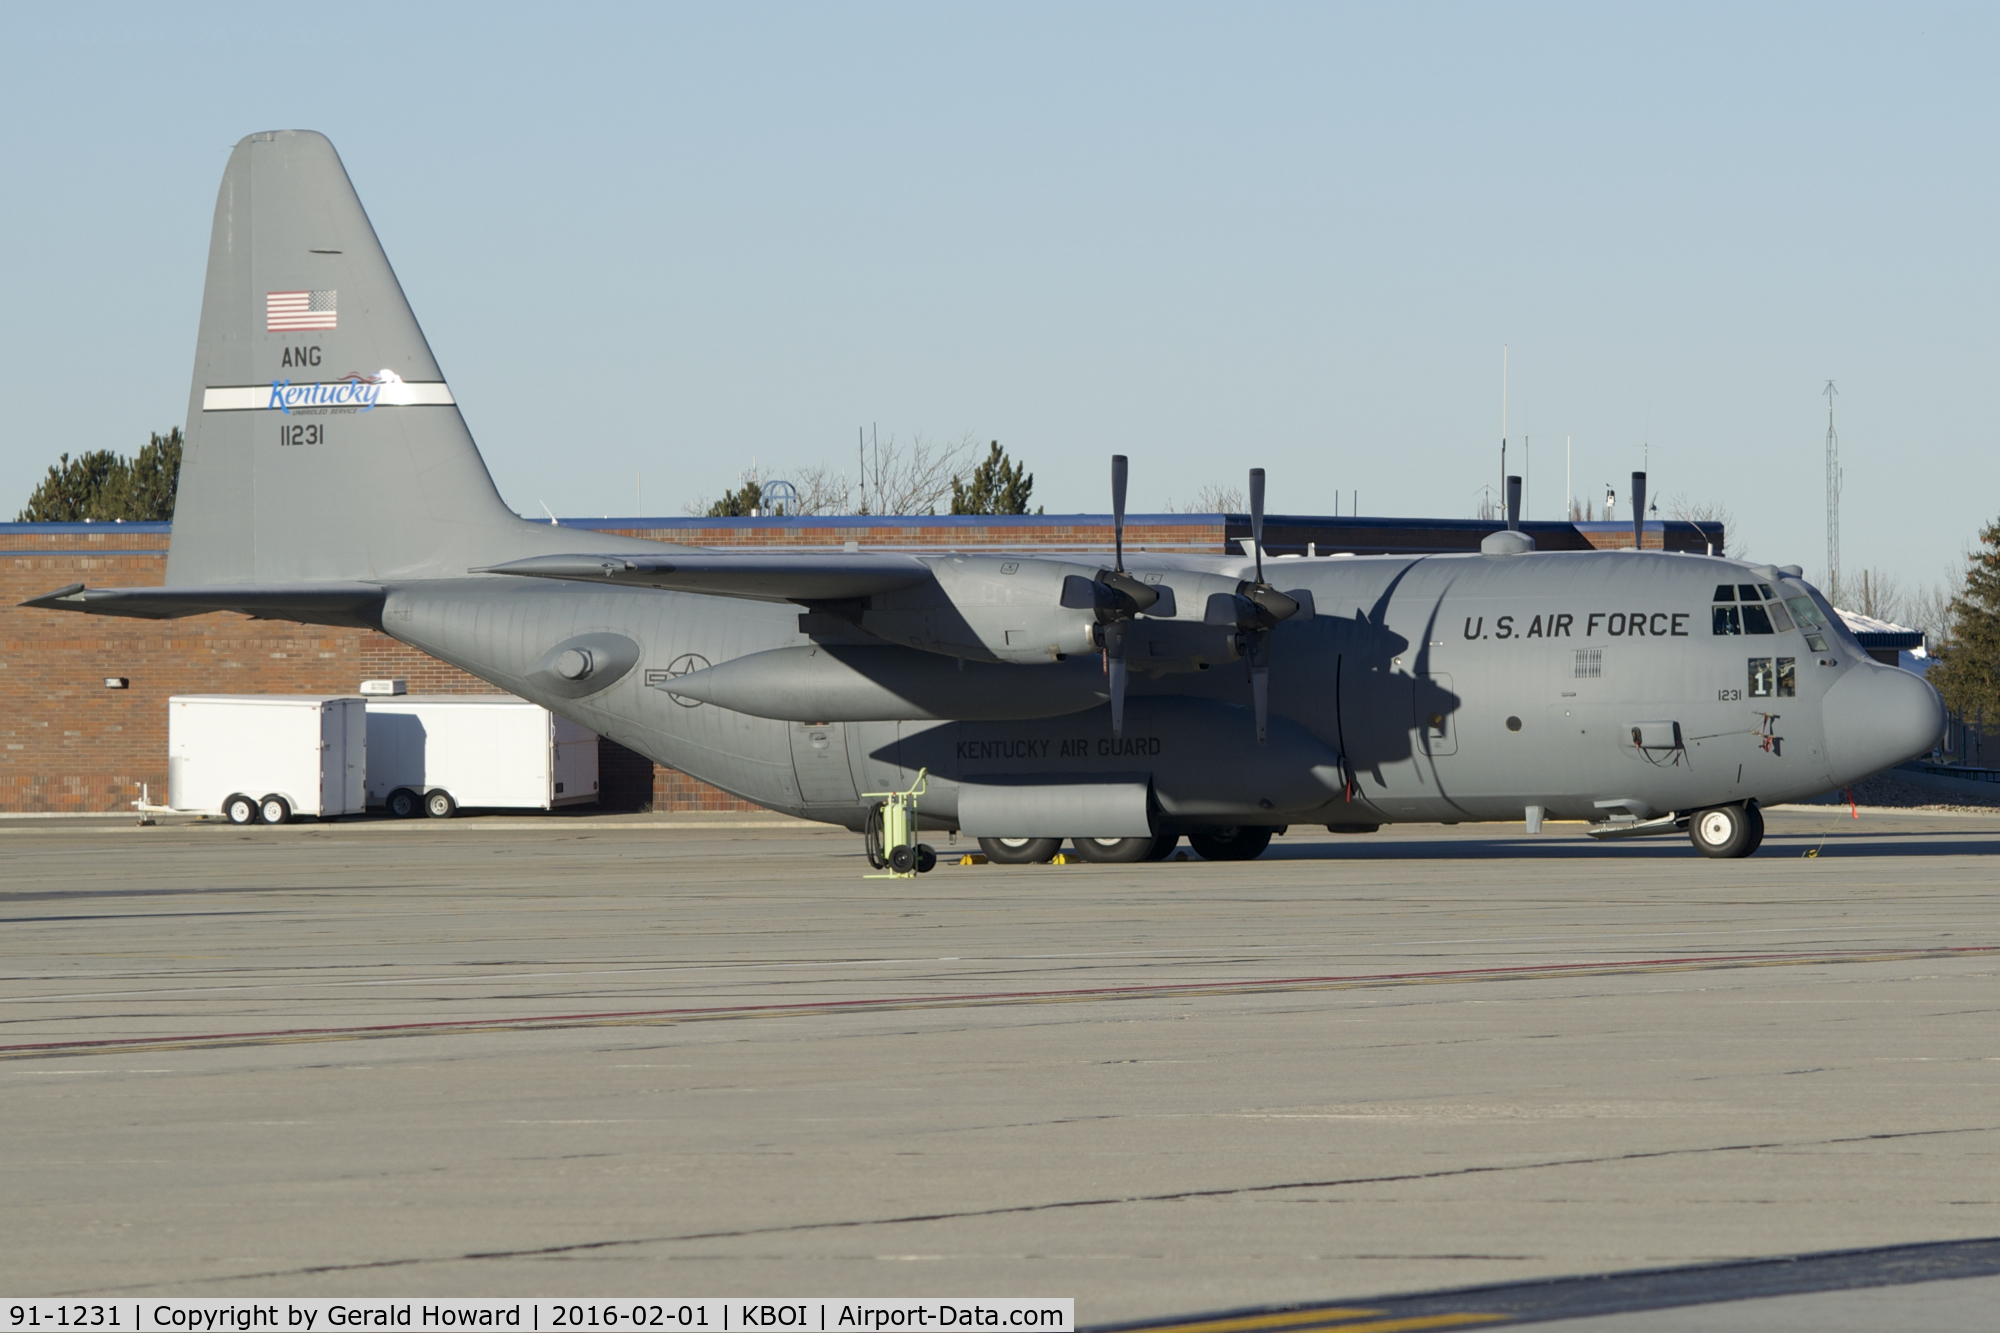 91-1231, 1992 Lockheed C-130H Hercules C/N 382-5278, Parked on Idaho Air Guard ramp. 123rd Airlift Wing, Kentucky ANG.